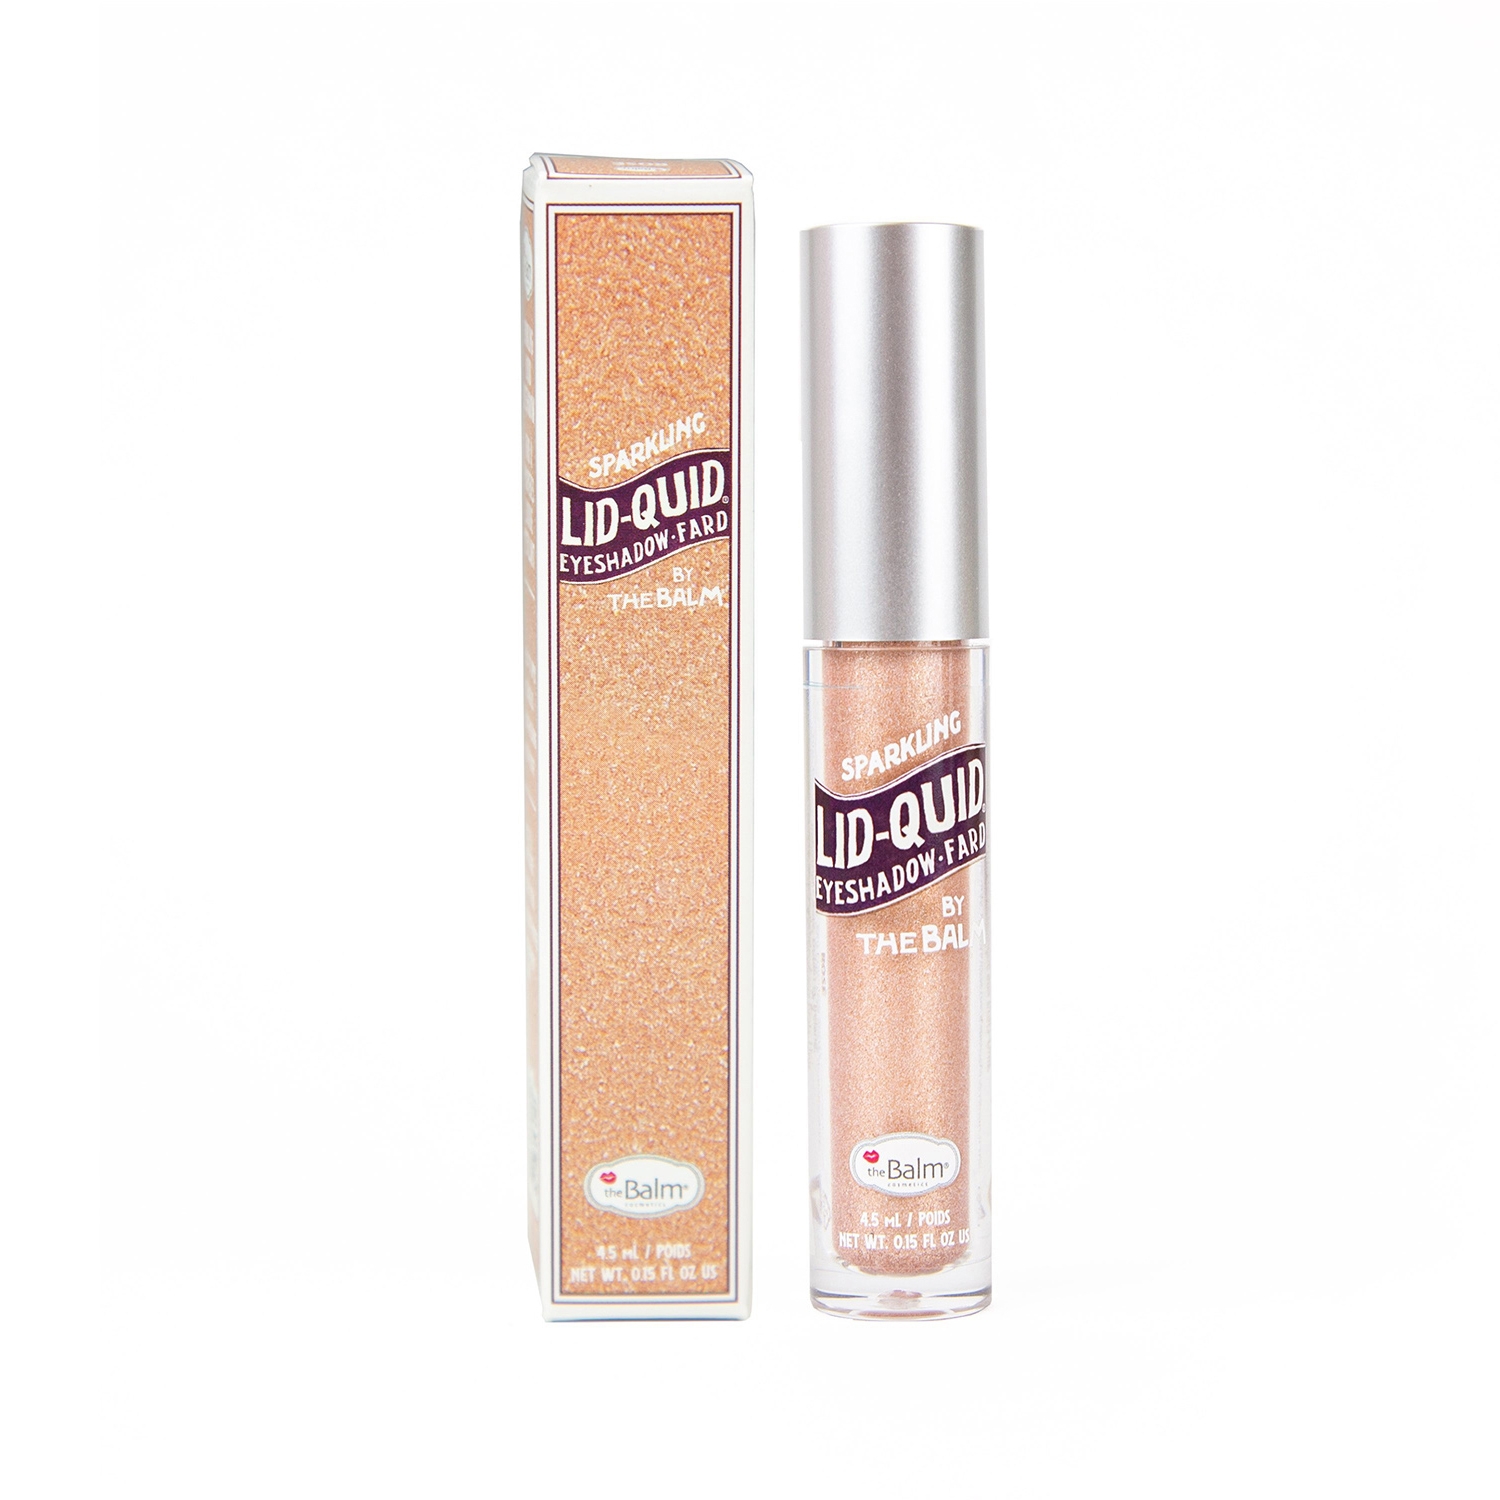 theBalm Cosmetics | theBalm Cosmetics Lid-Quid Sparkling Liquid Eyeshadow - Rose (4.5ml)